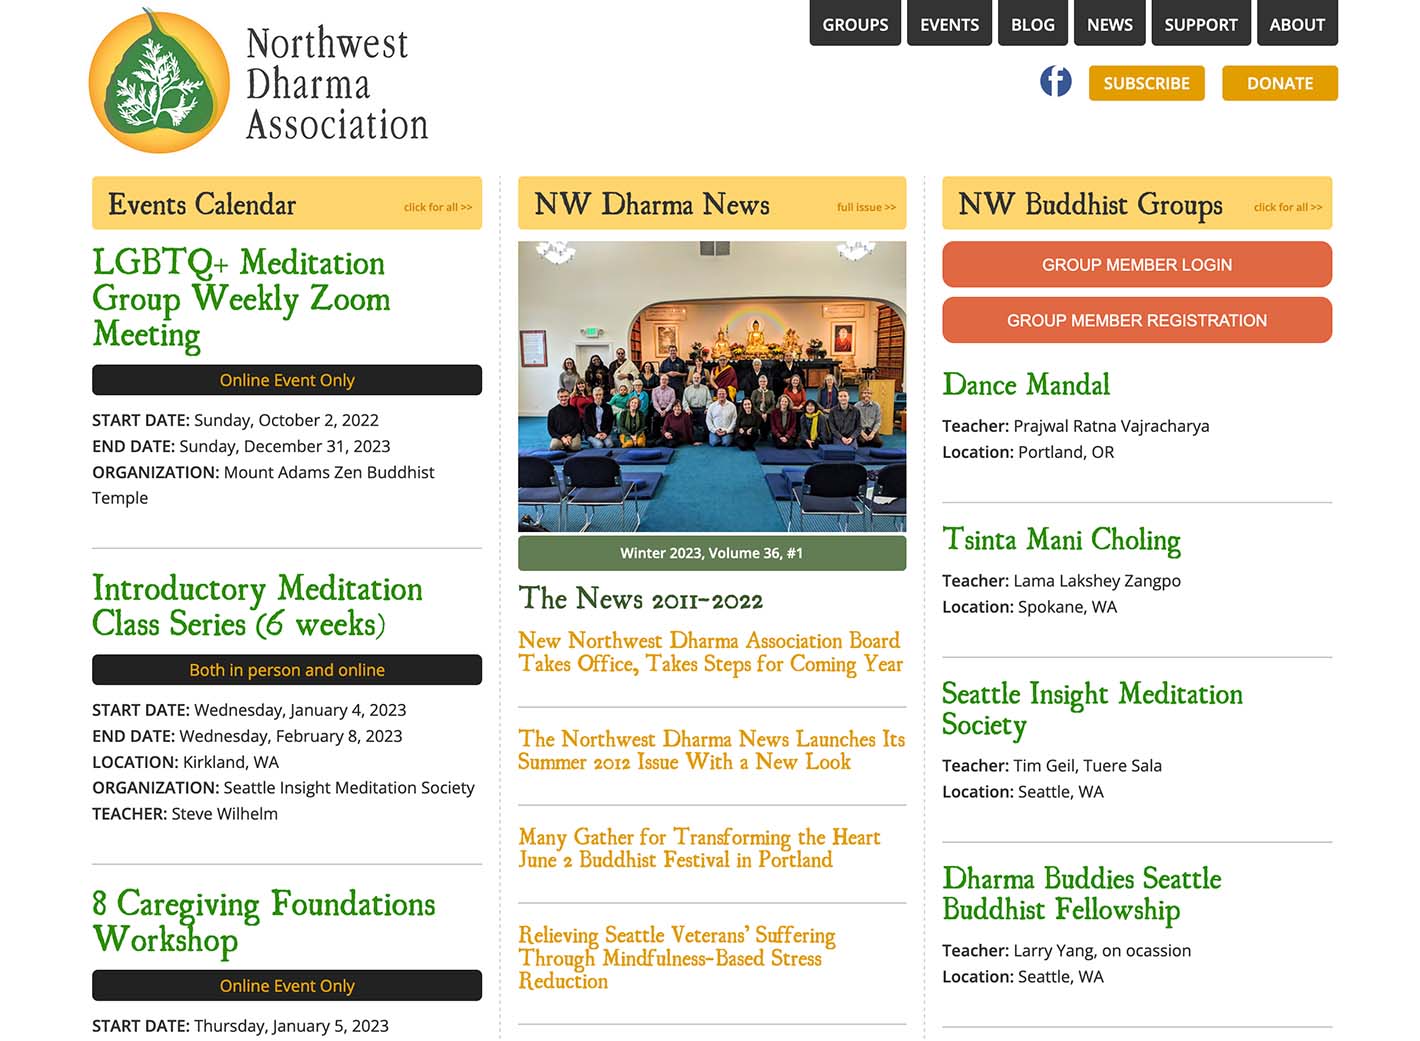 Northwest Dharma News